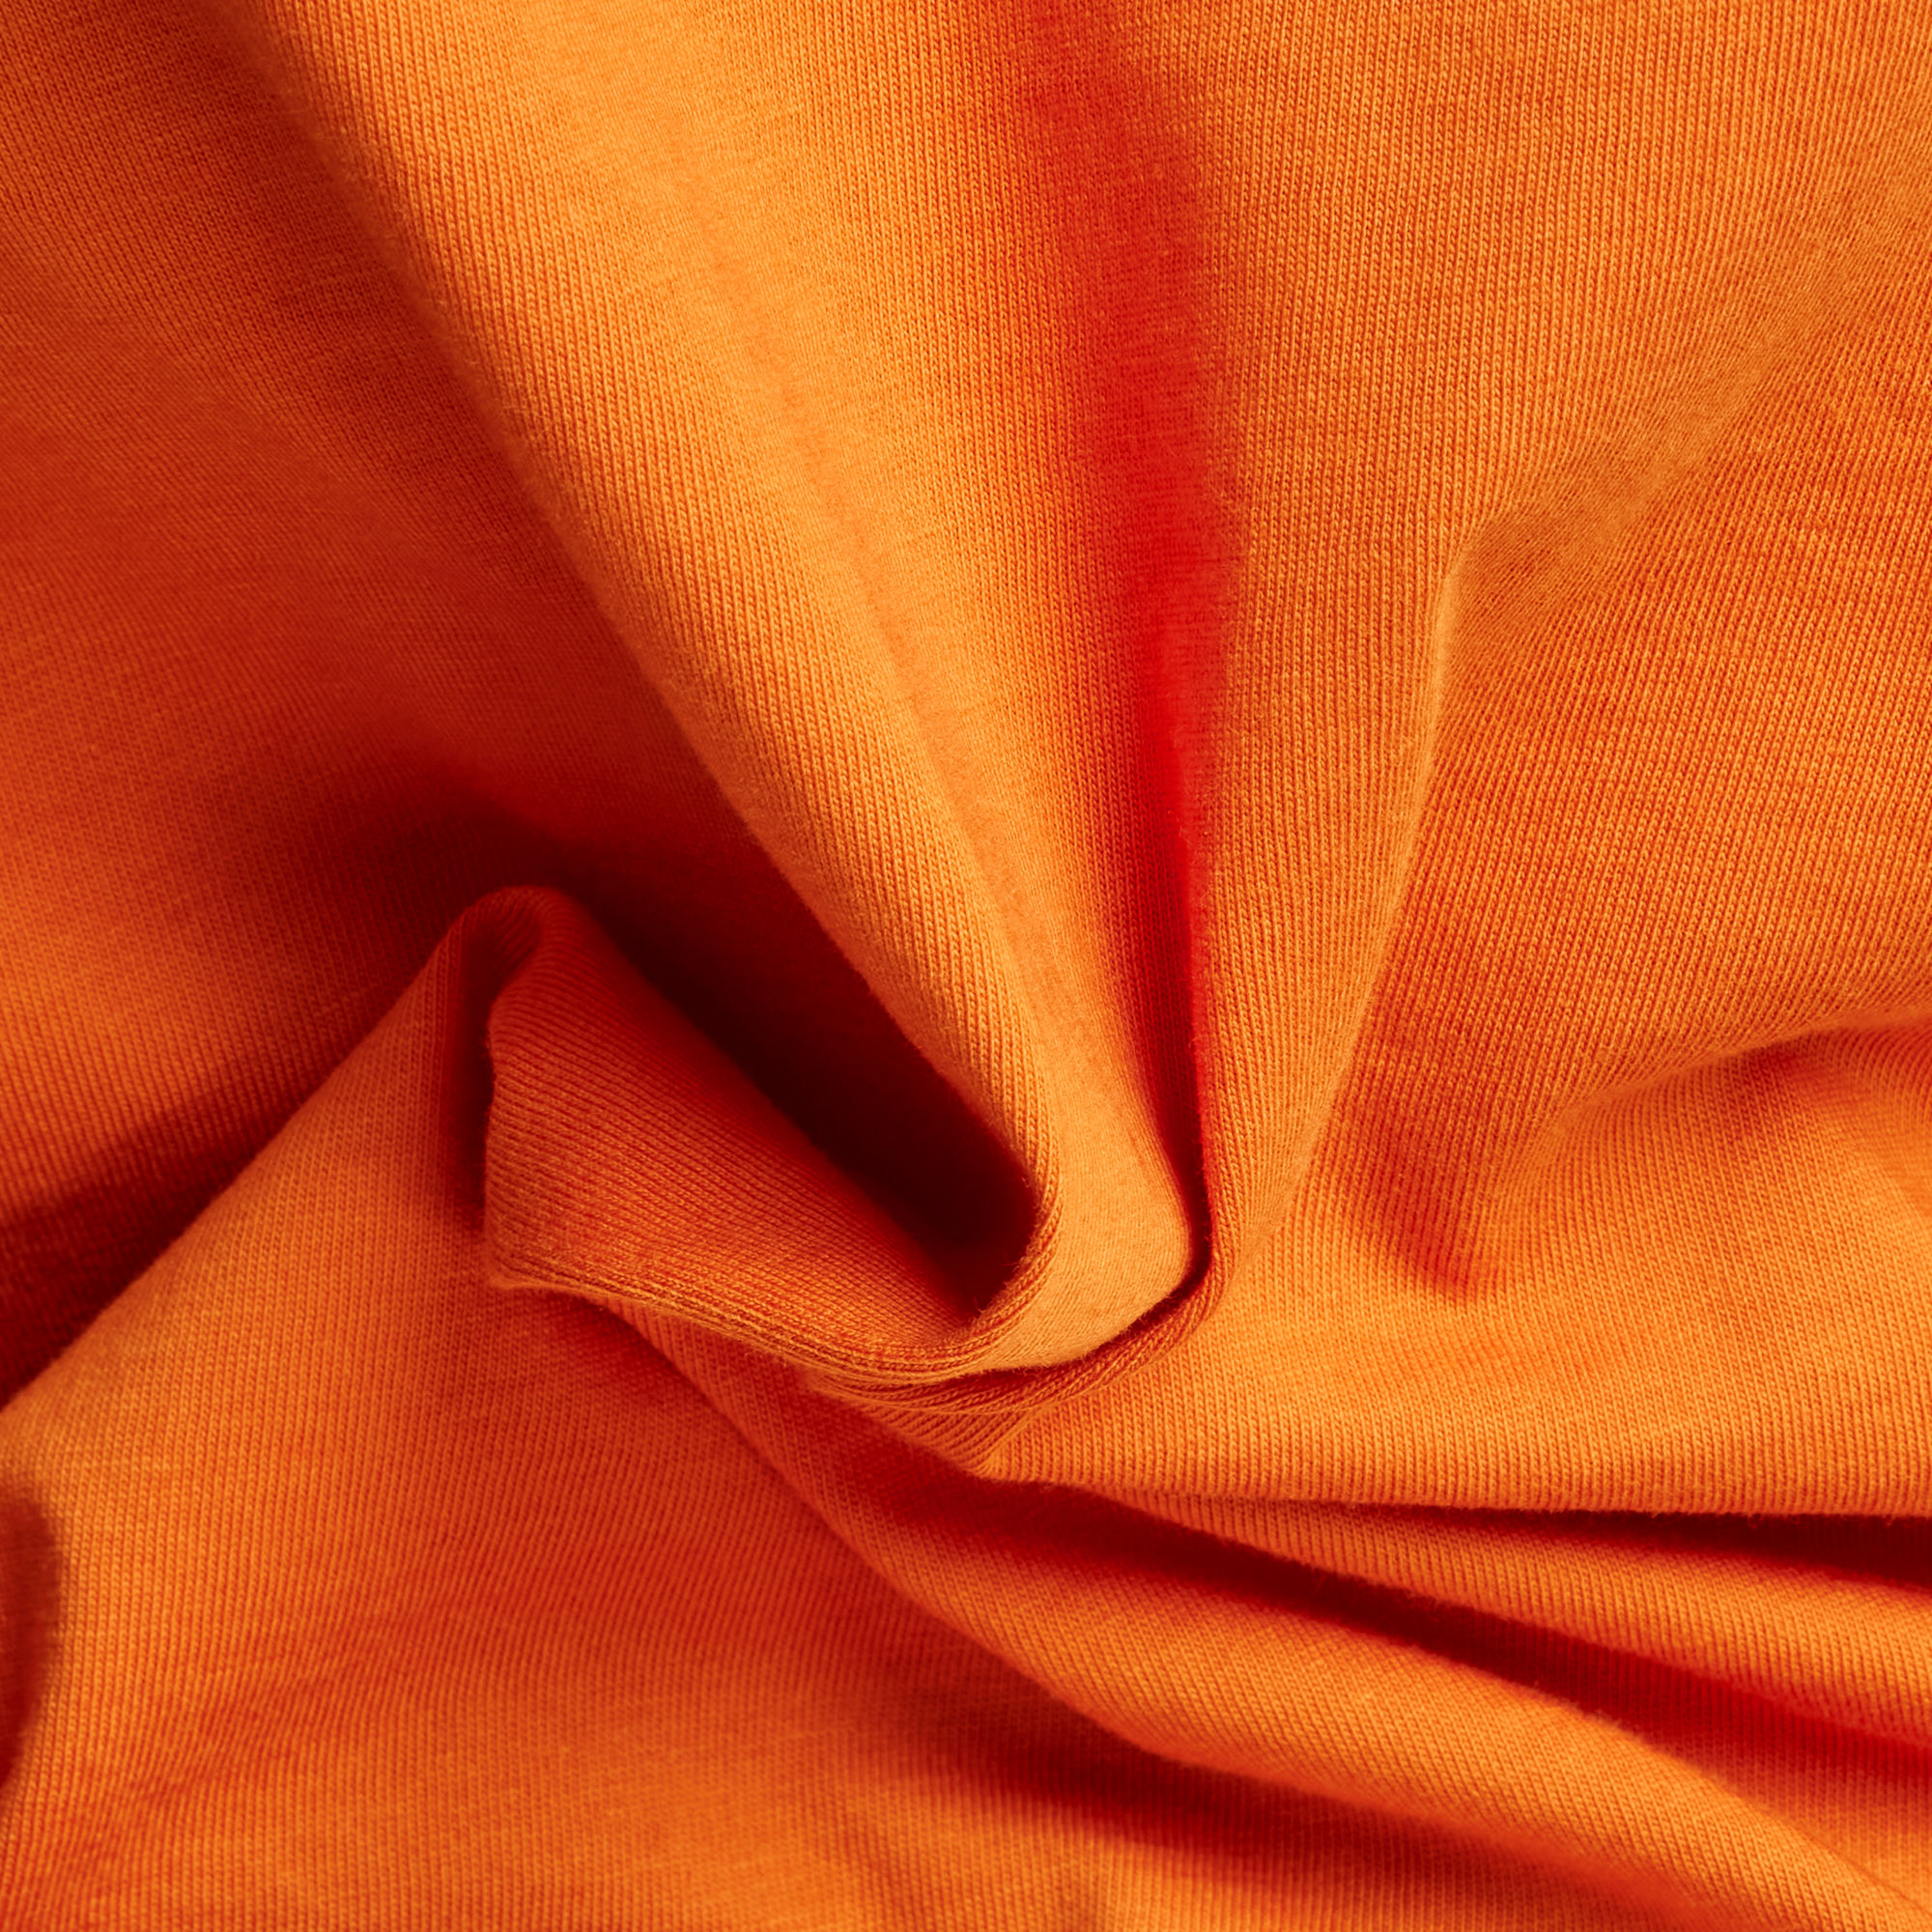 G-Star RAW Distressed Logo T-Shirt Oranje Heren